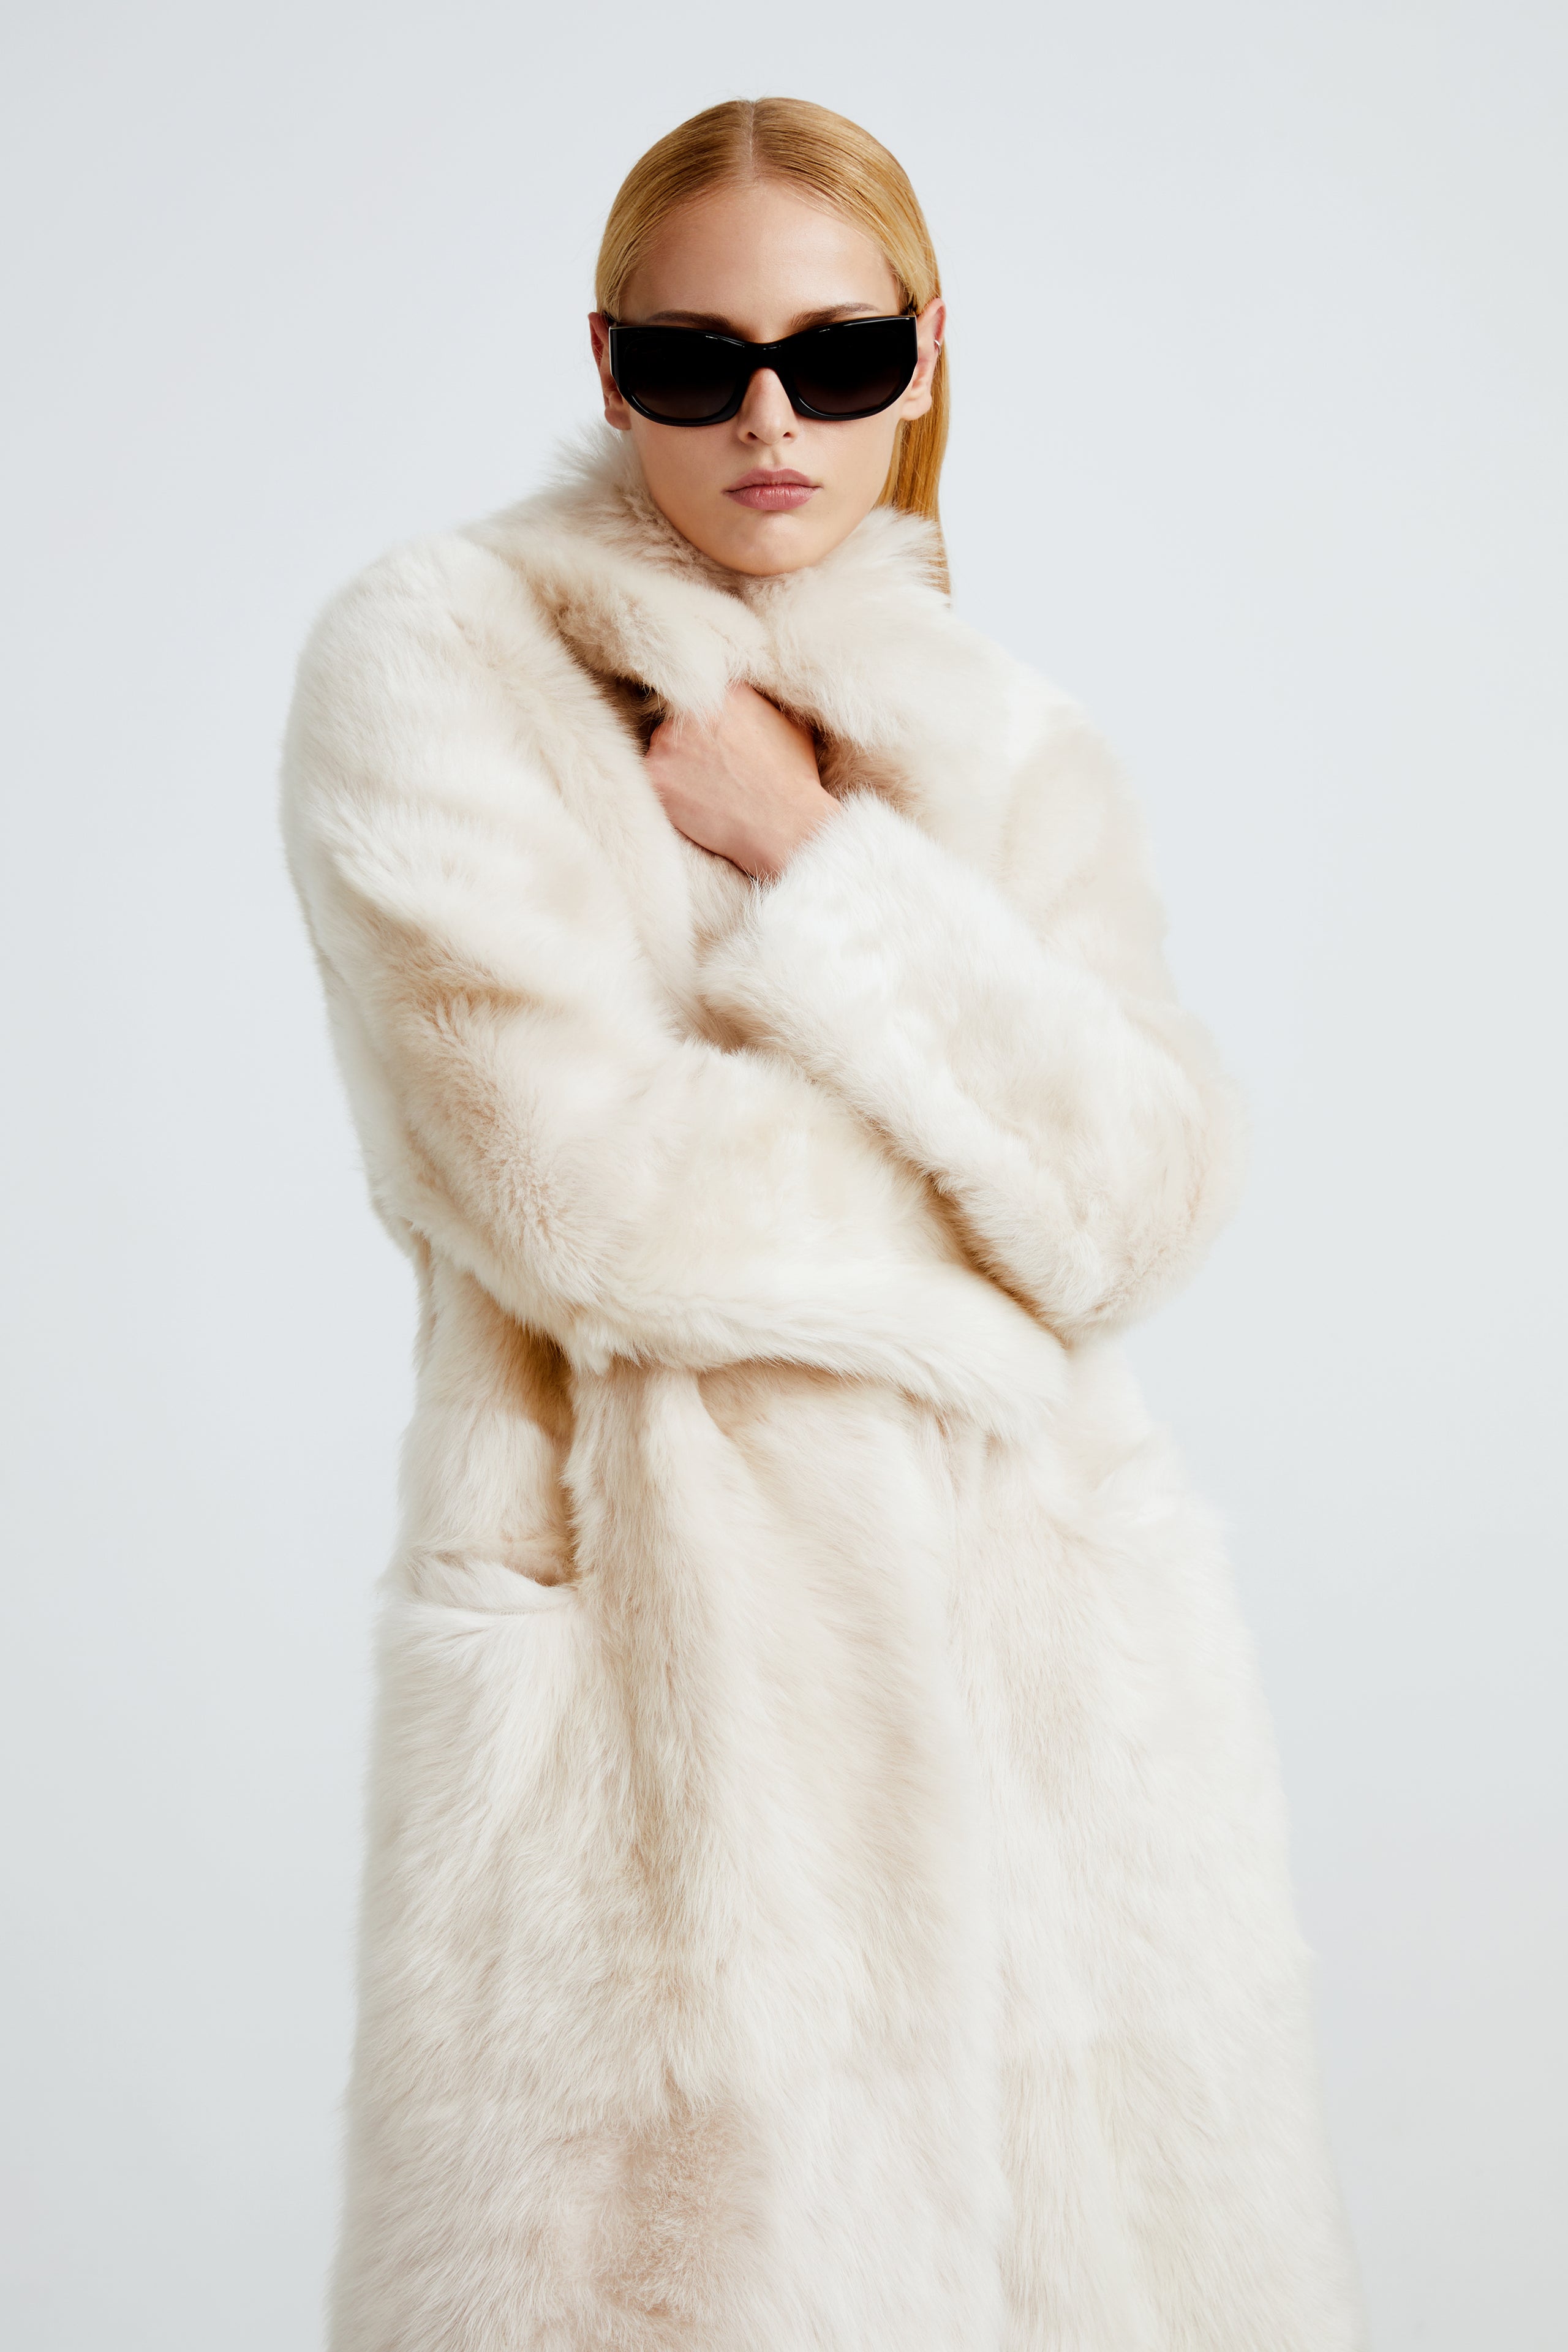 Model is wearing the Evita Cloud Après-Ski Shearling Coat Close Up